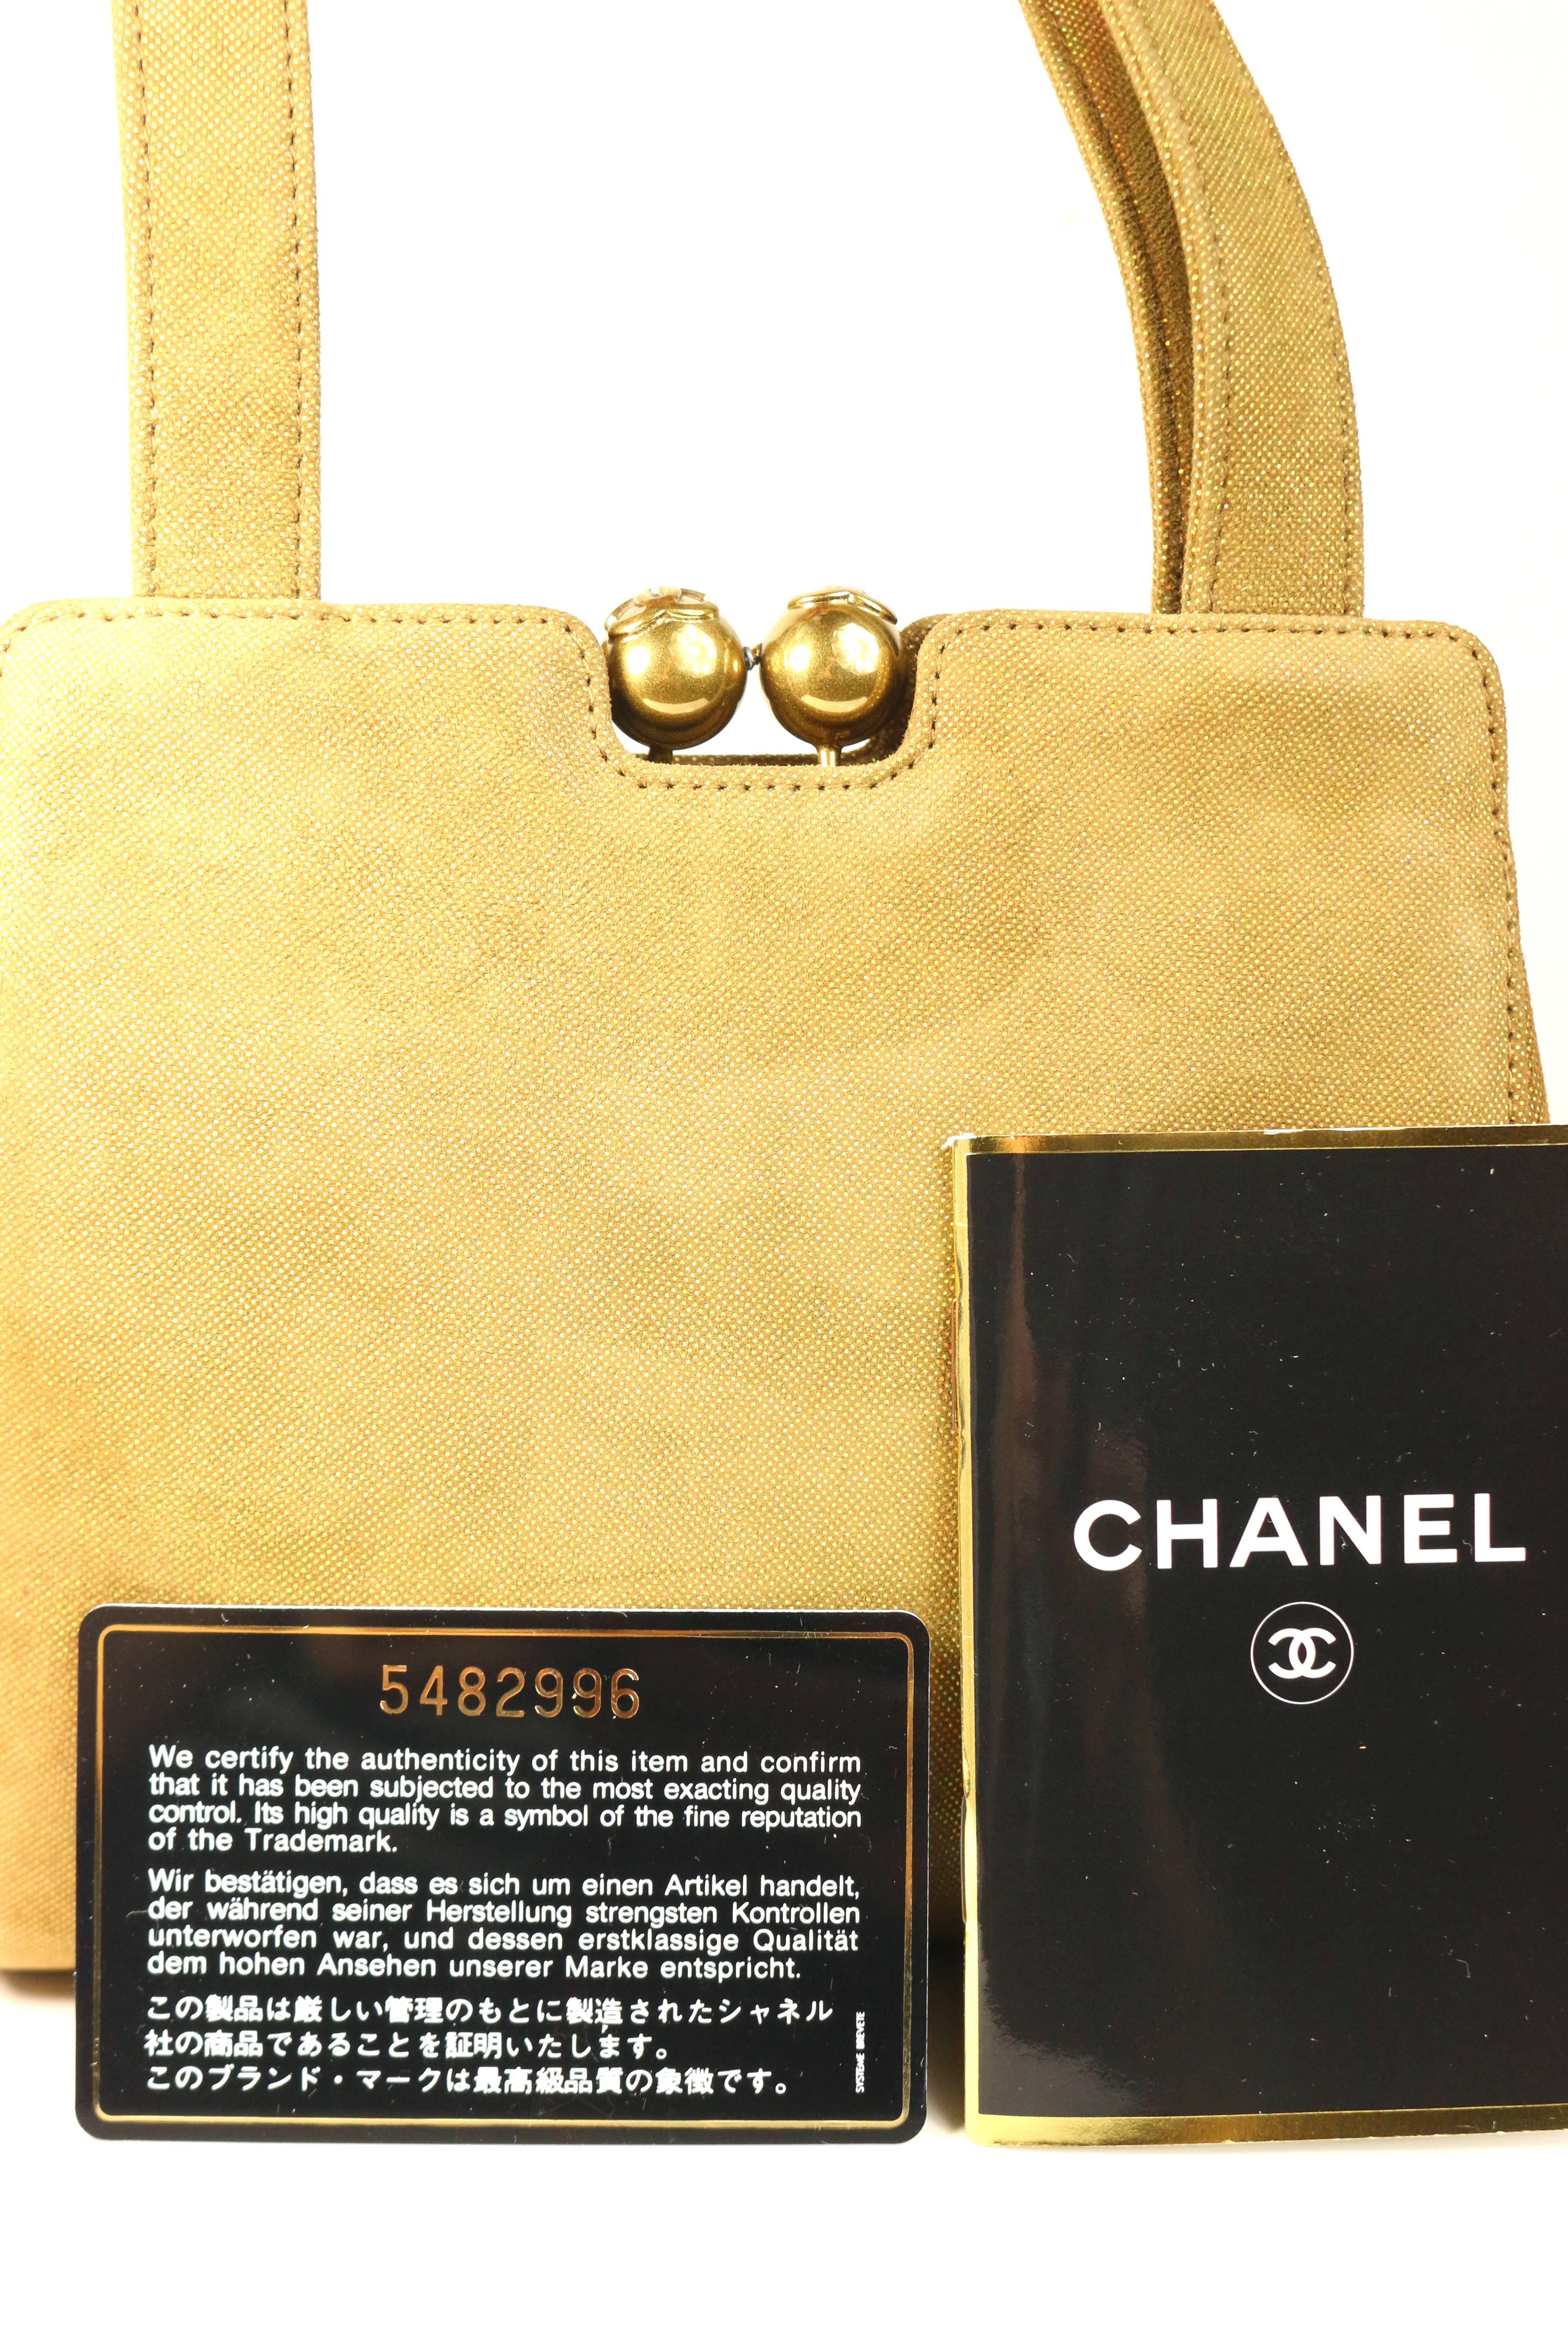 Chanel Gold Metallic Suede Small Handbag  4